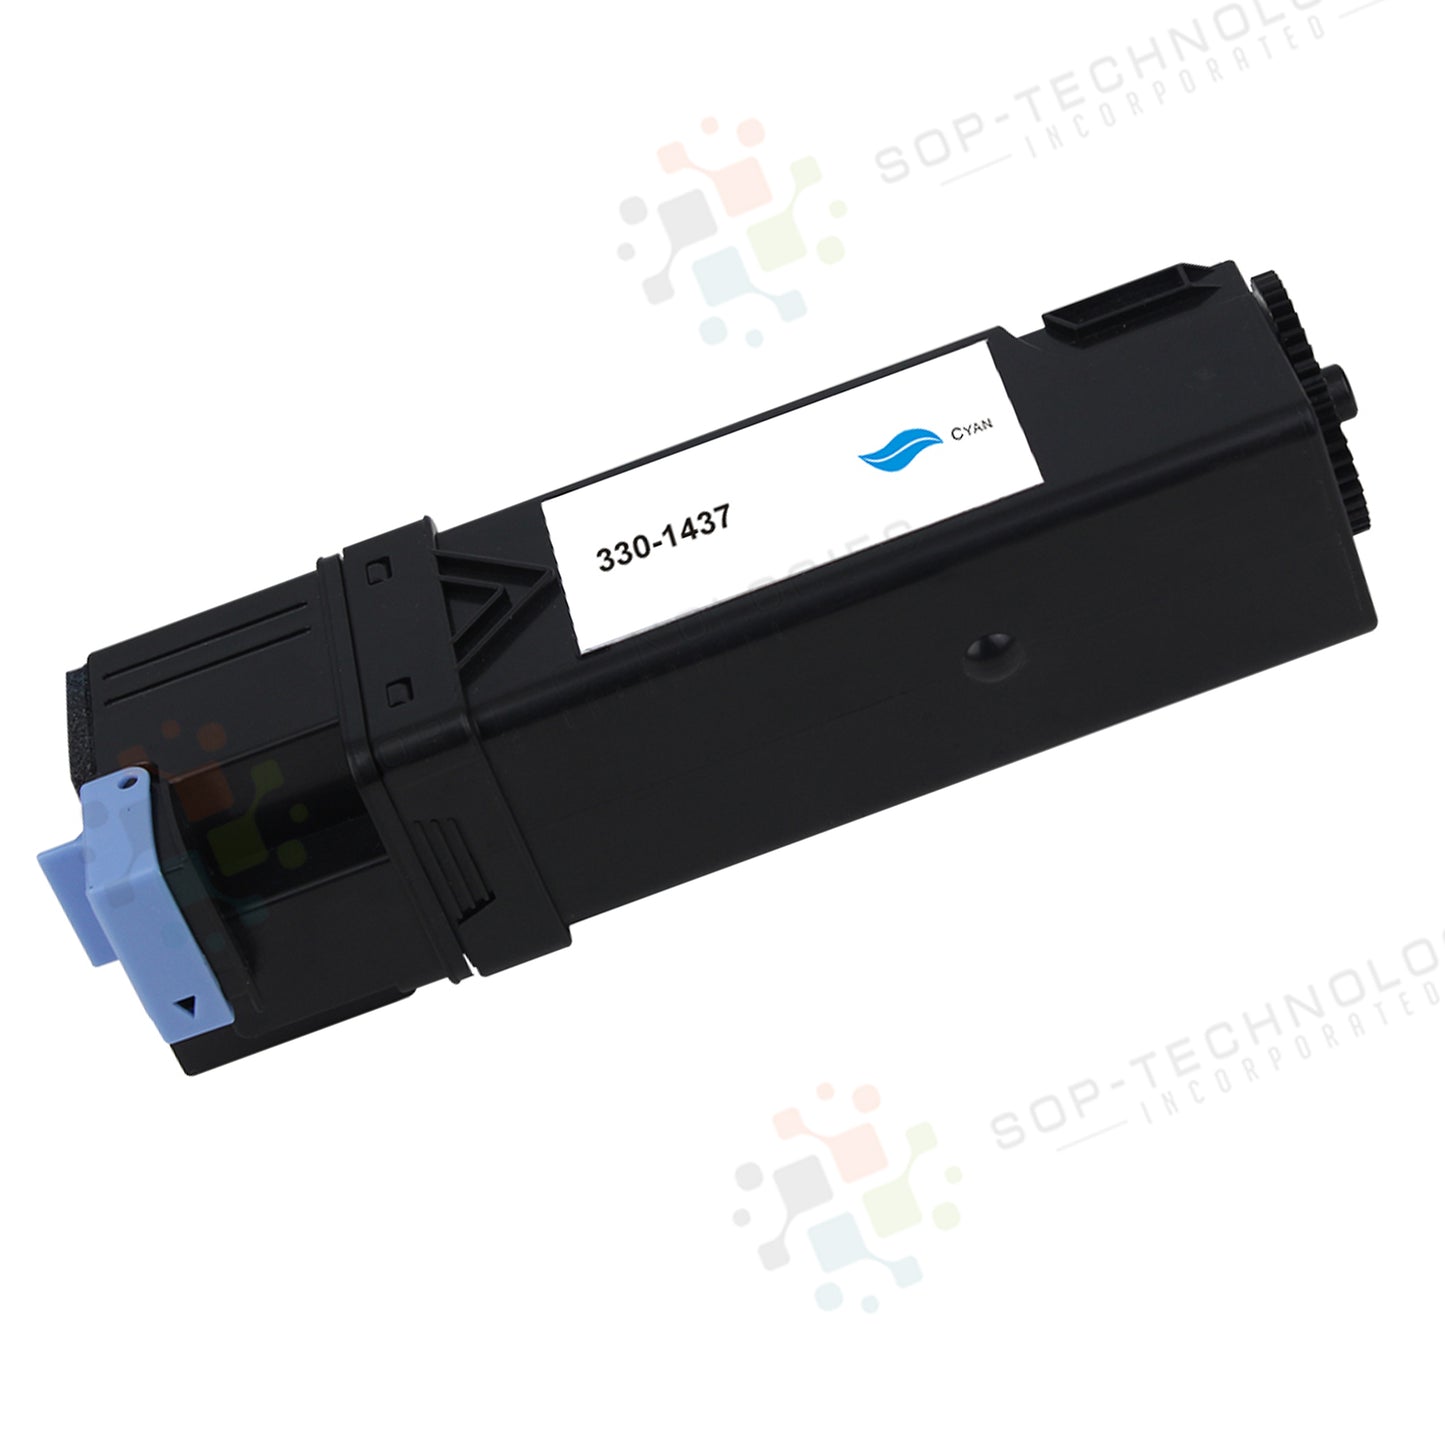 3 Pack Compatible Toner Cartridge for Dell 2130cn - SOP-TECHNOLOGIES, INC.